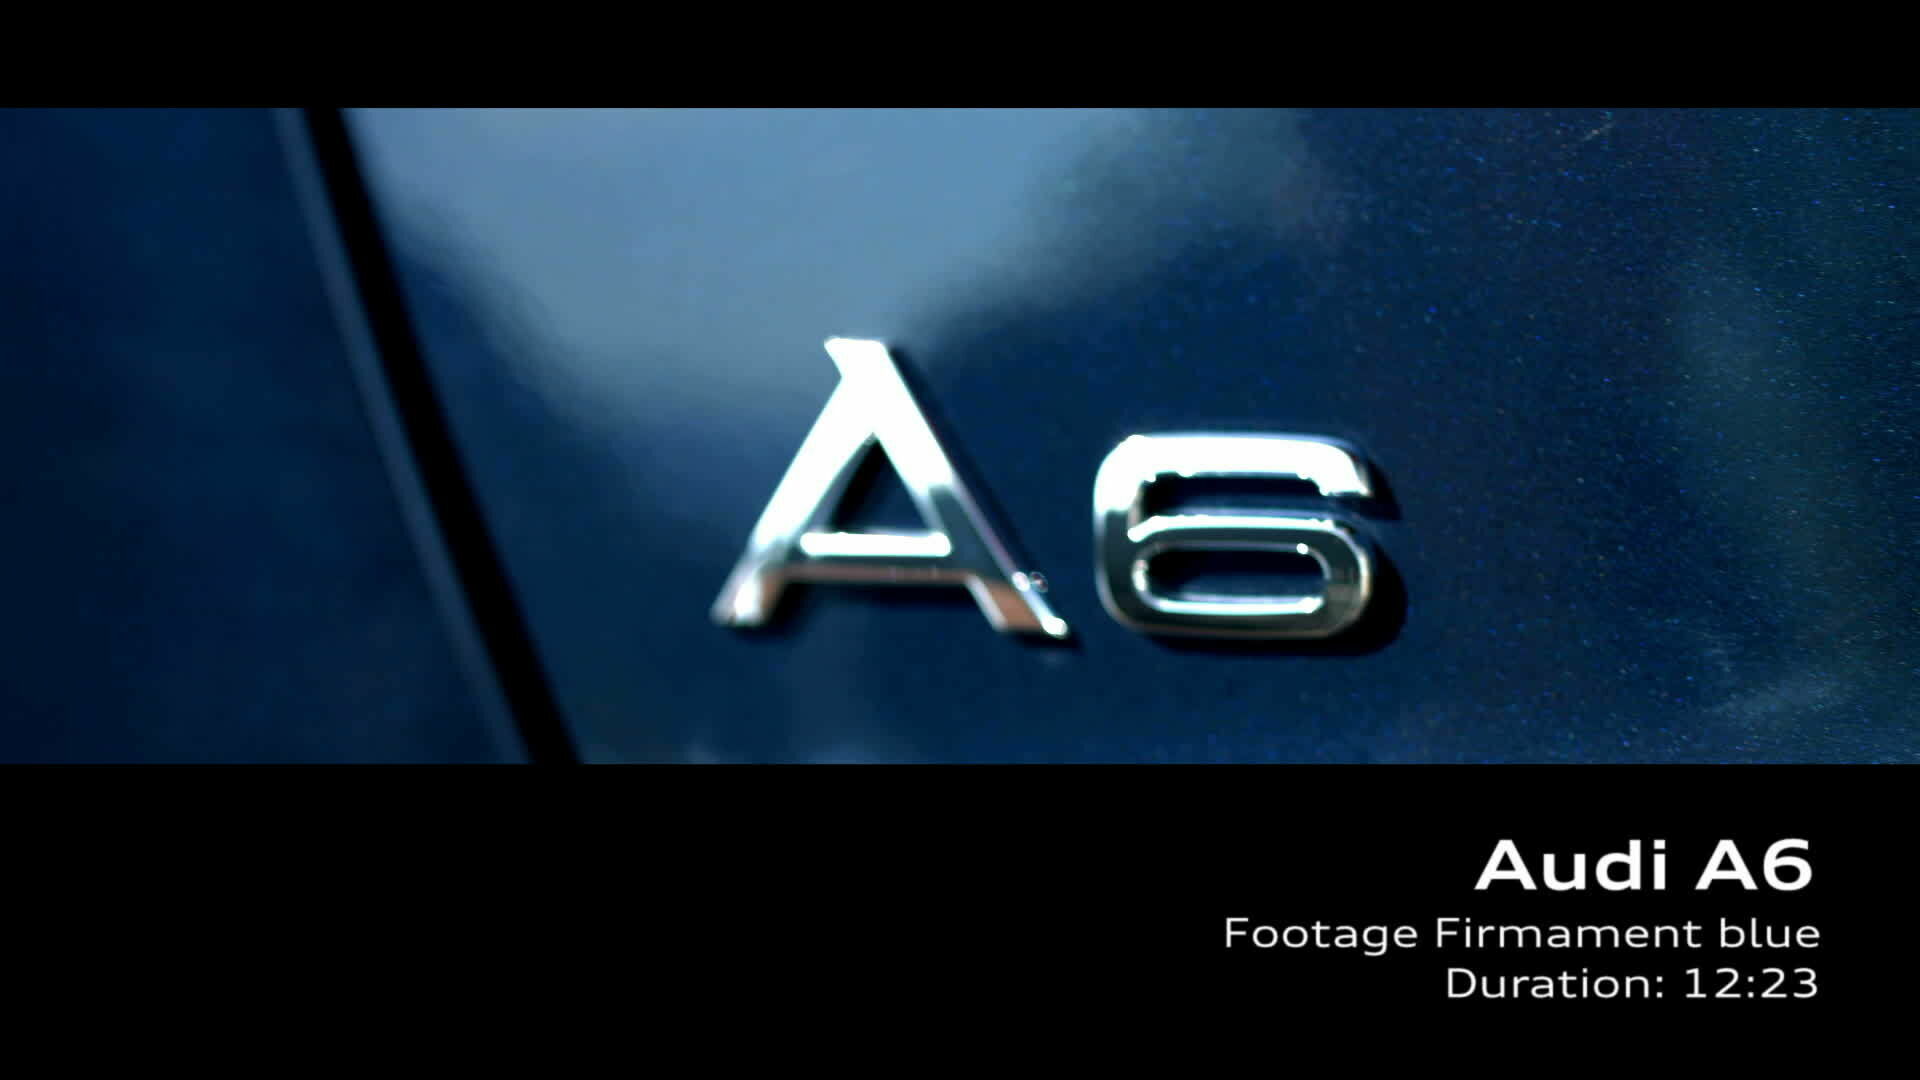 Audi A6 Footage Firmament blue